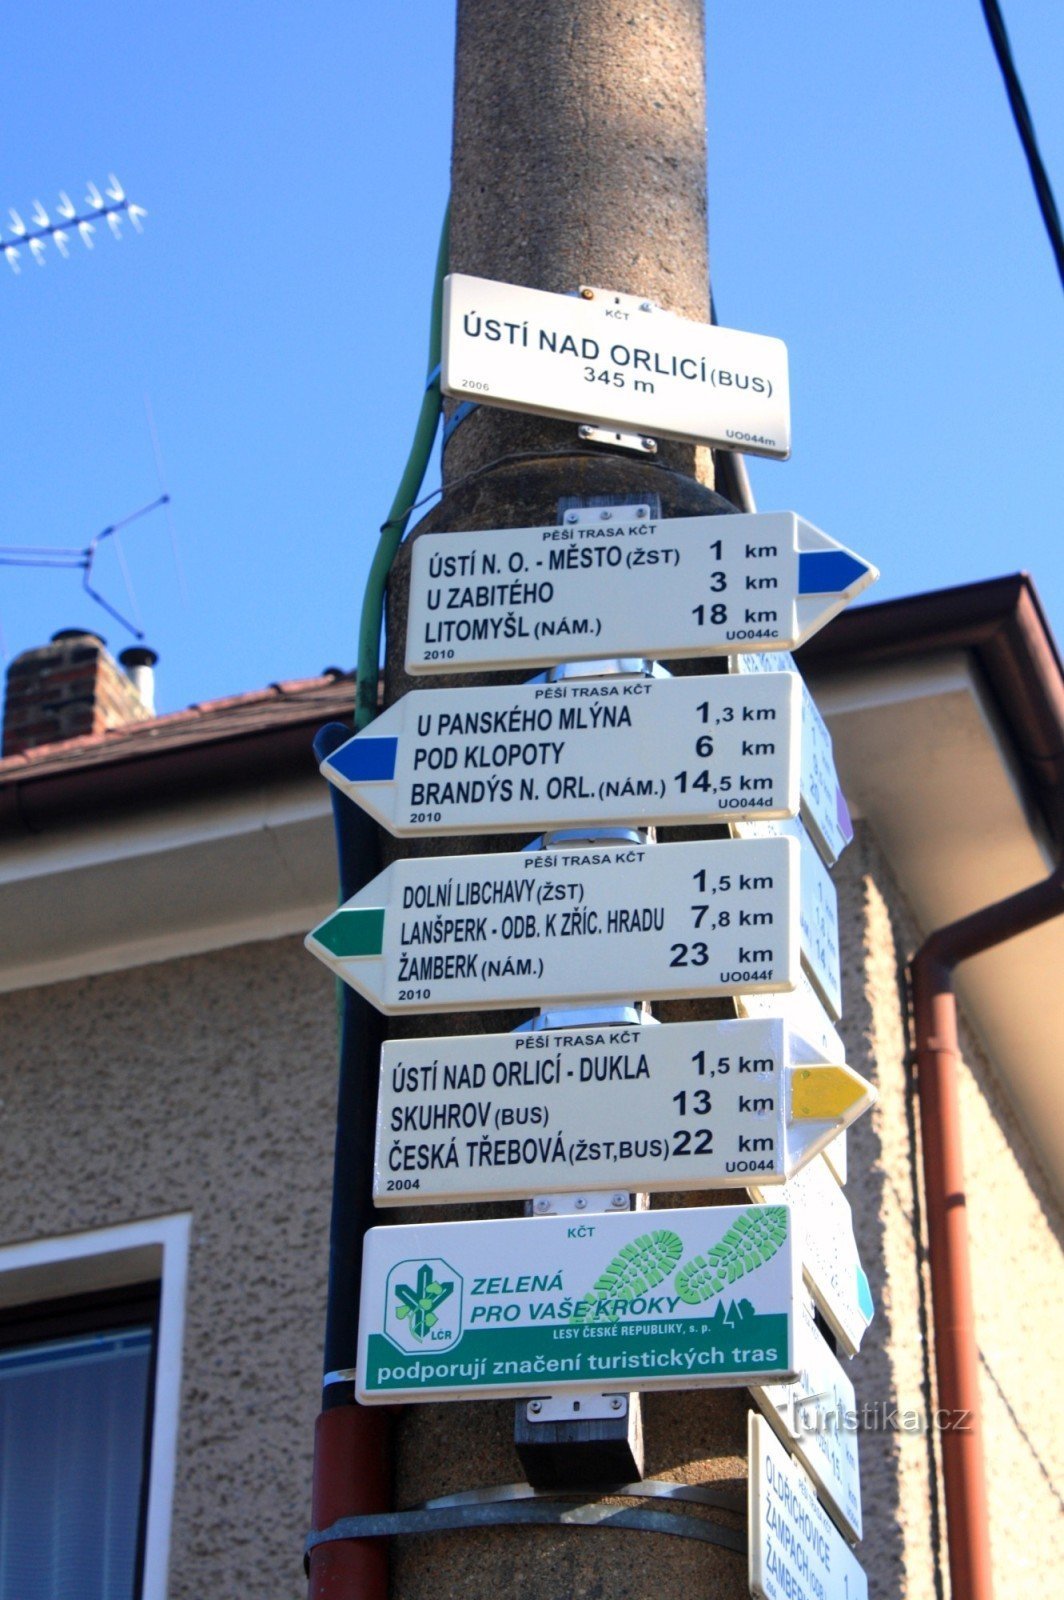 Ústí nad Orlicí - glavni turistični kažipot